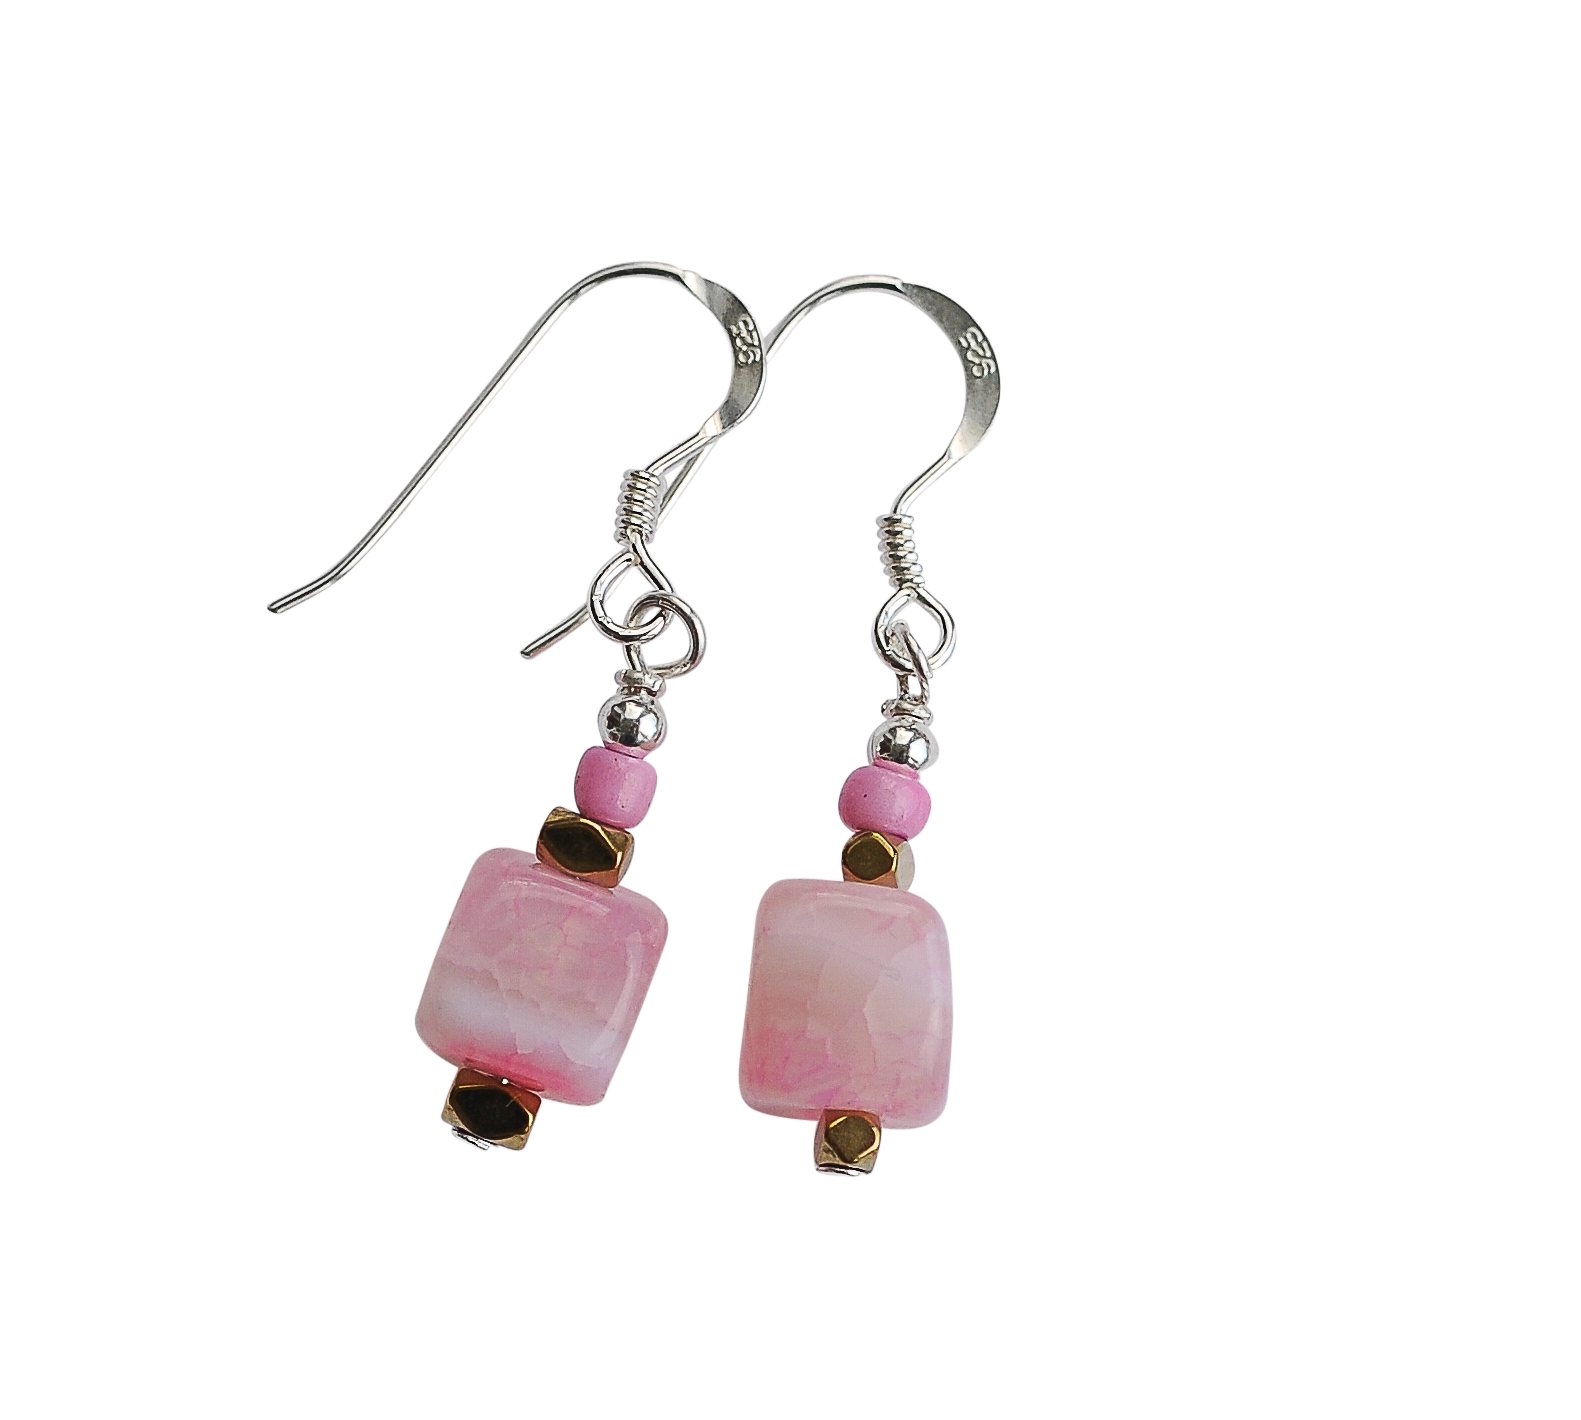 Pale pink agate stone earrings